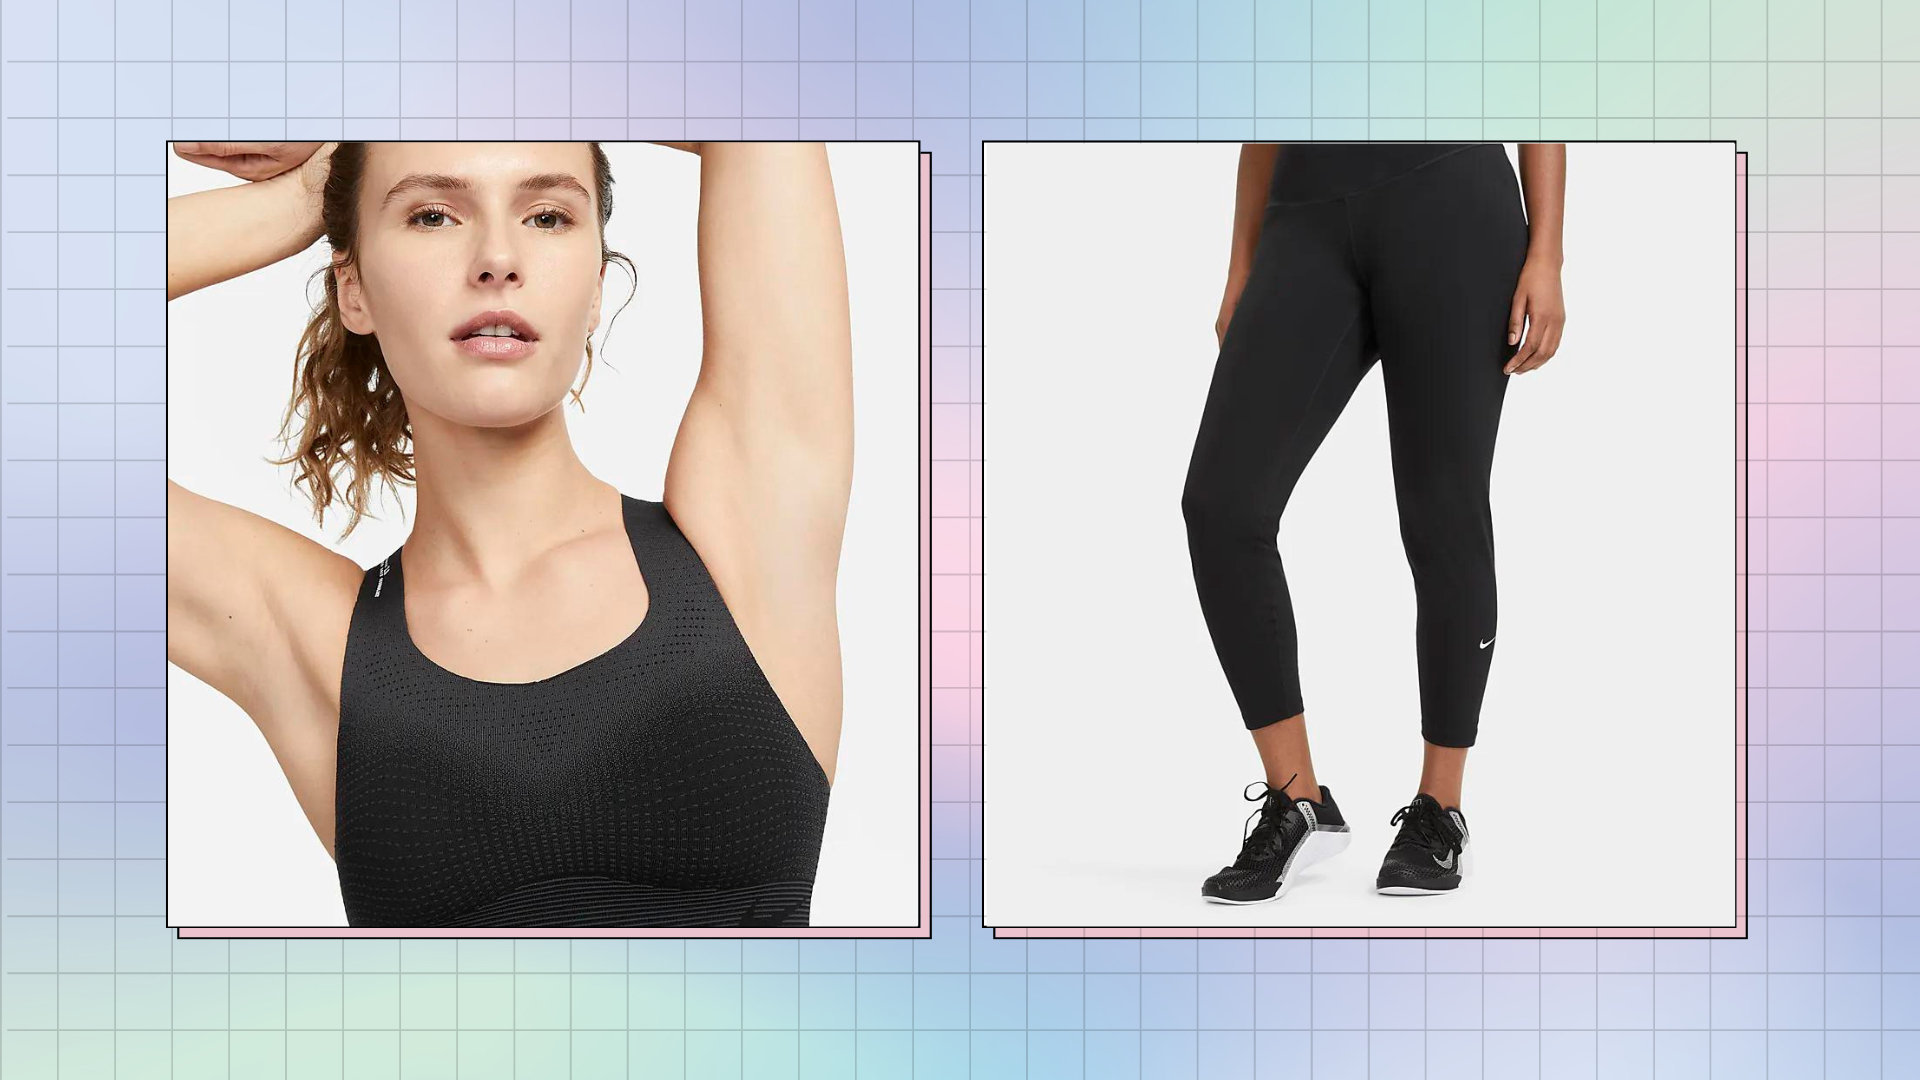 Nike & women: Fitness or fashion?